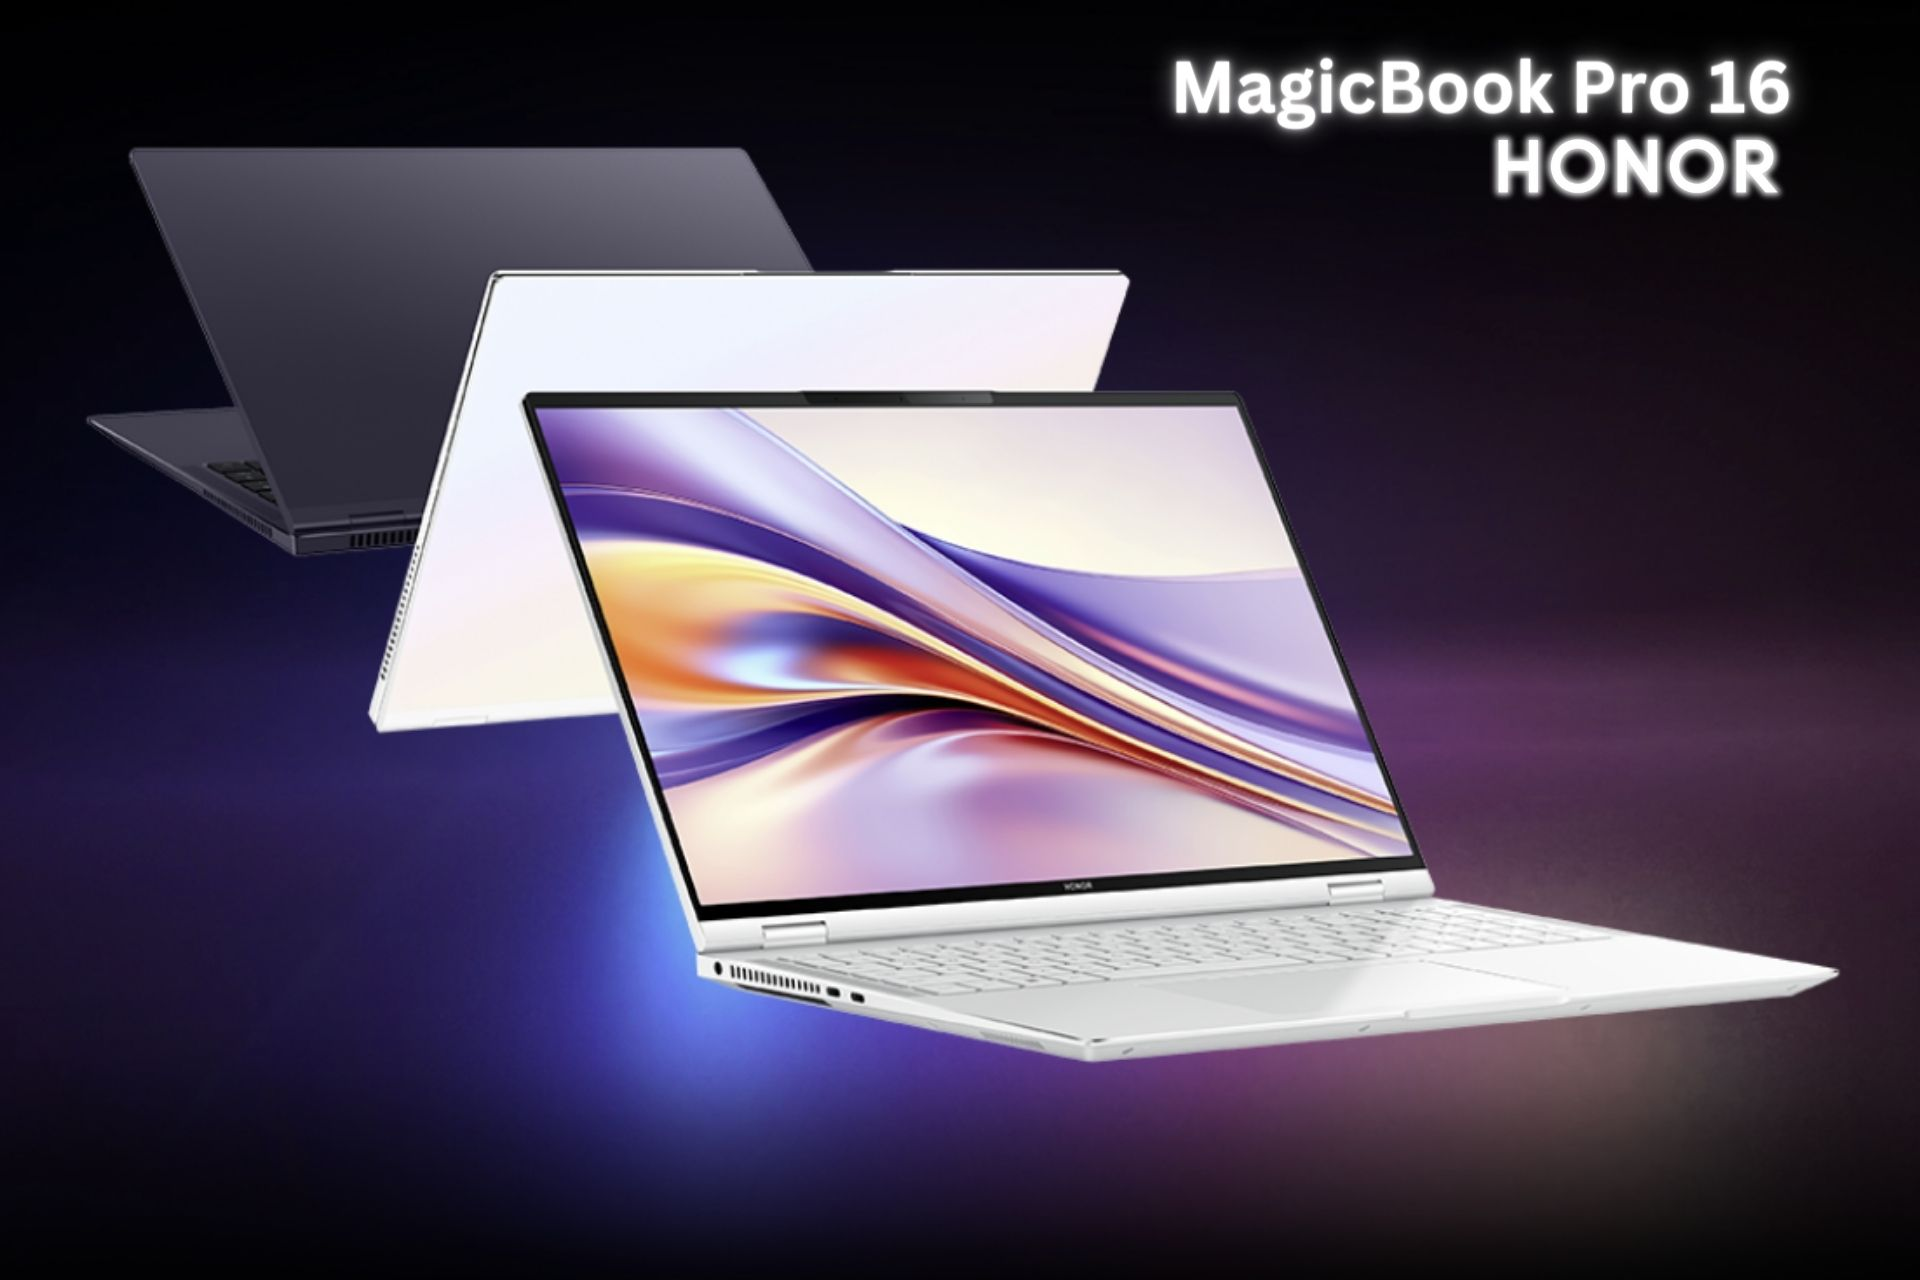 MagicBook Pro 16: This slim laptop brings gaming to 3072x1920p & 165 Hz